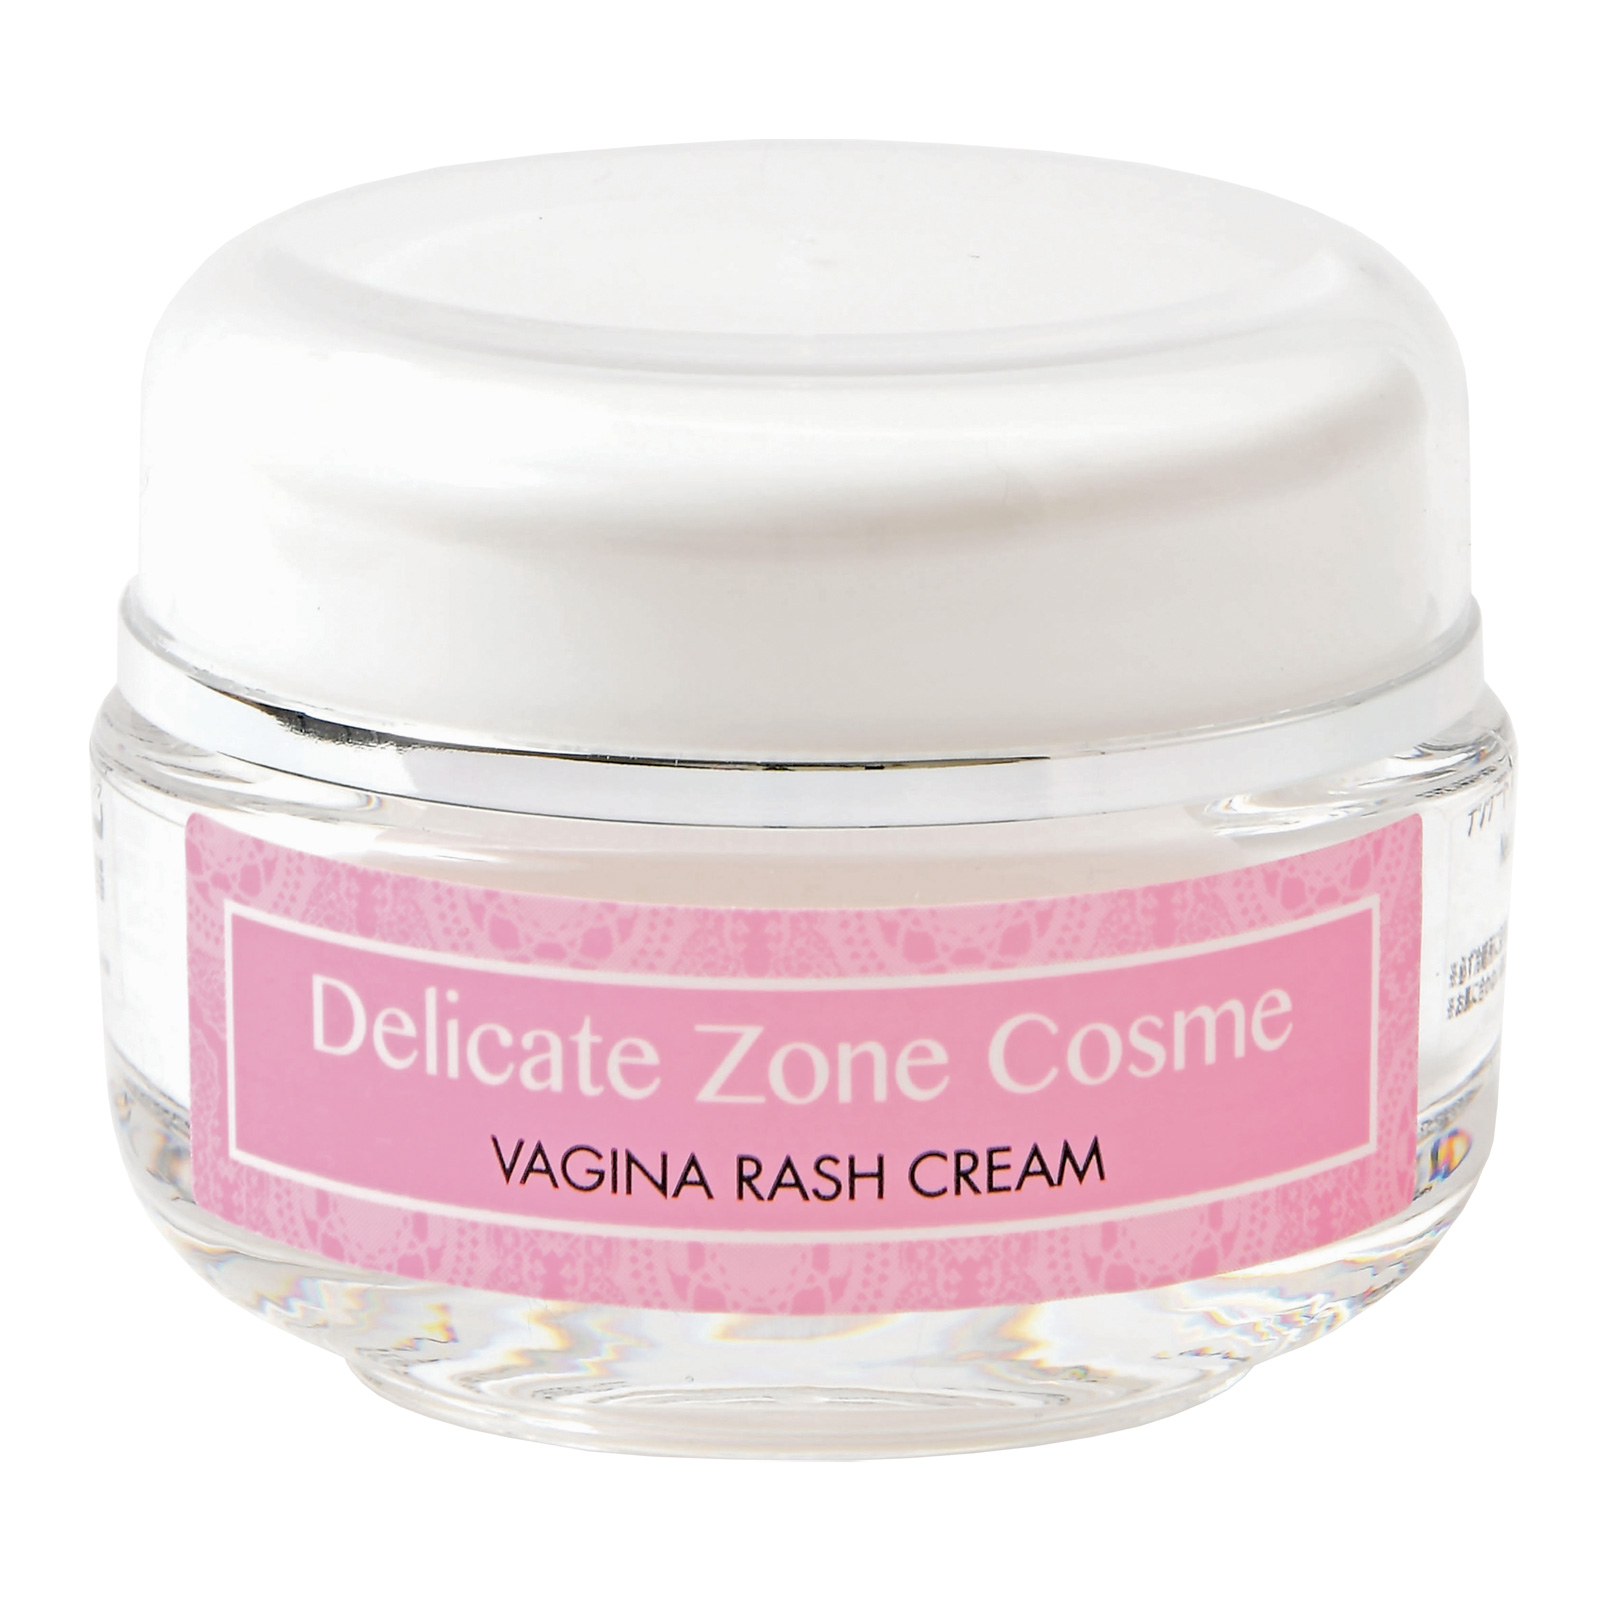 Hanako Delicate Zone Cosme Vagina Rash Cream. Крем для деликатных зон Ханако, 30 г